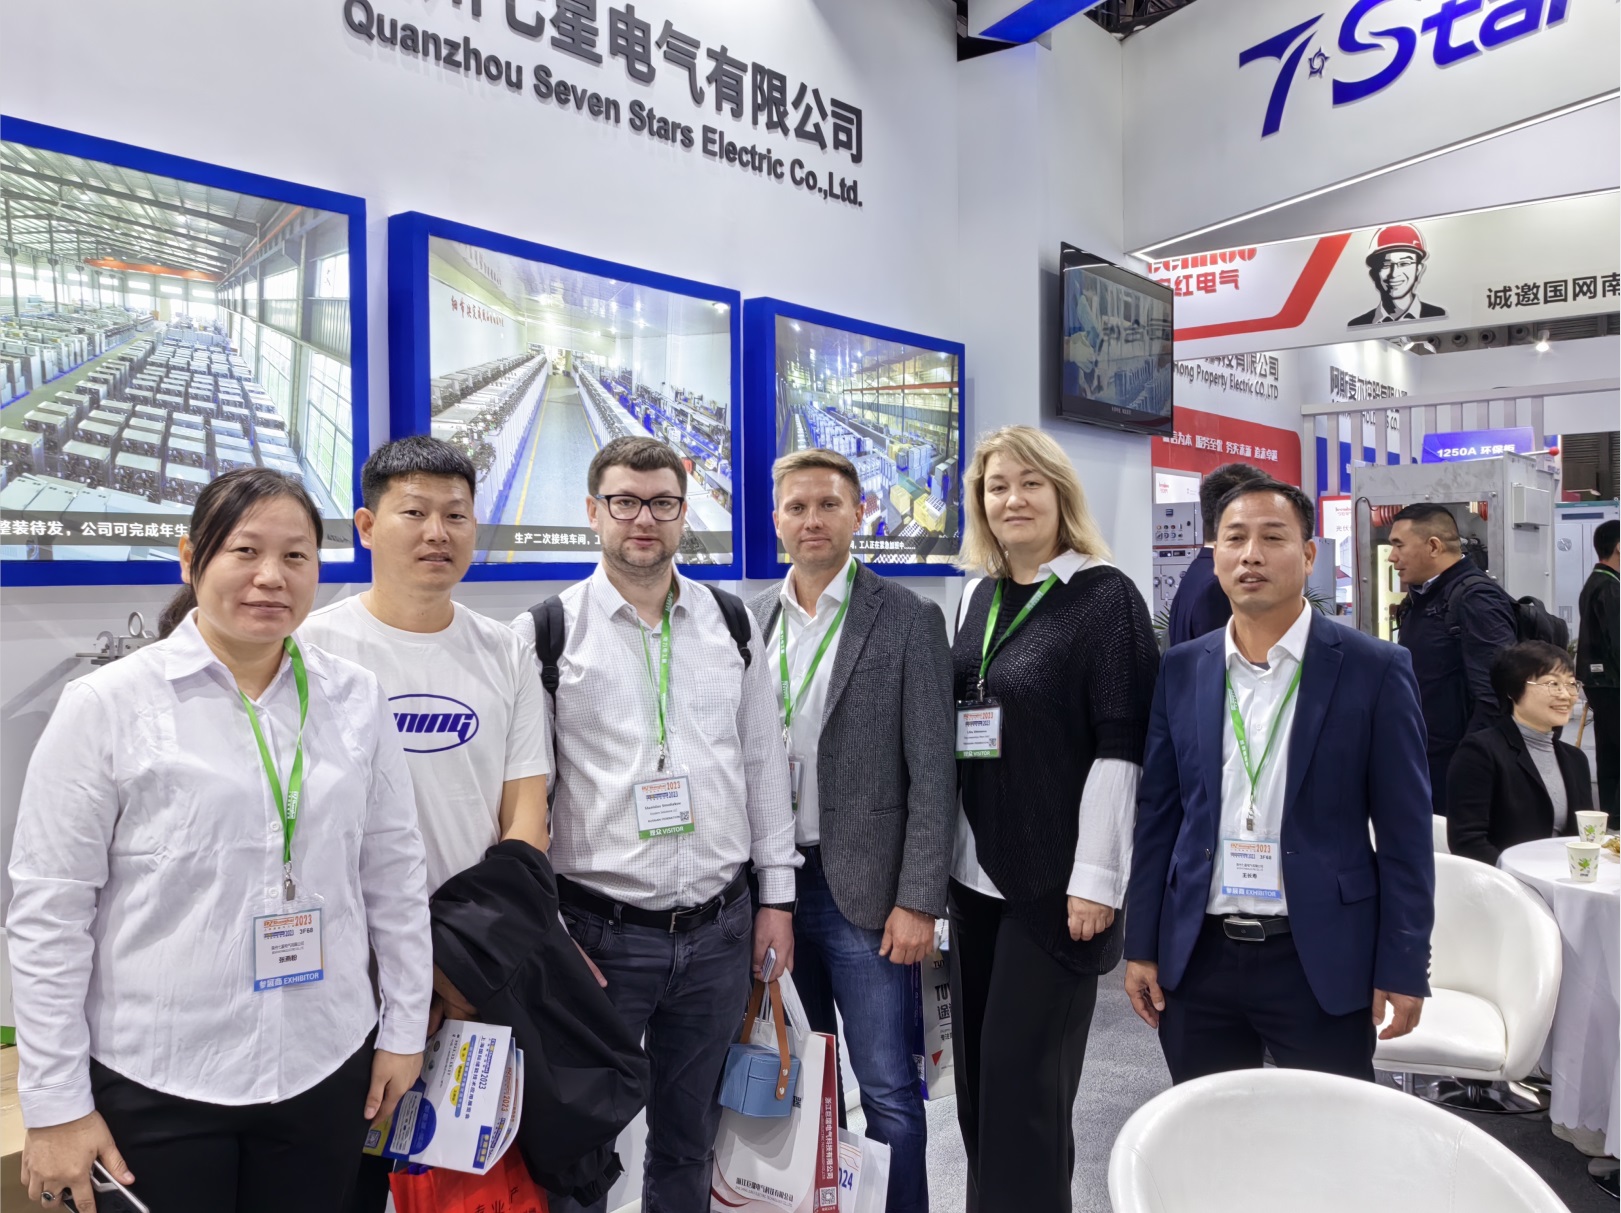 Seven Star Electric Co., Ltd. EP Power izložba u Šangaju bila je pun uspjeh